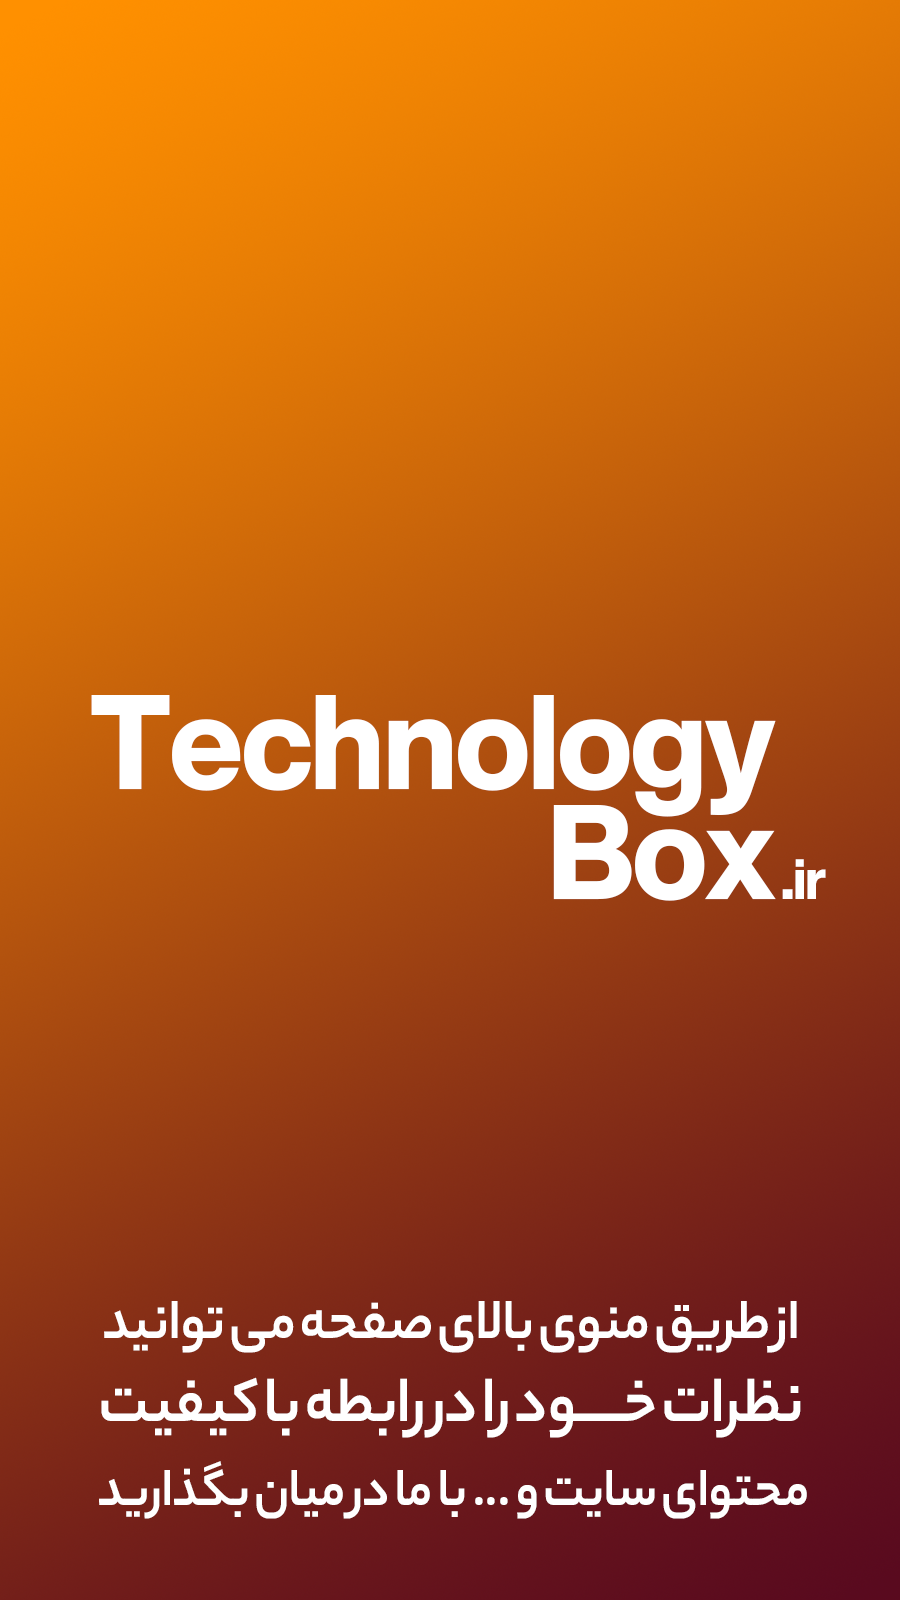 Technology Box Logo